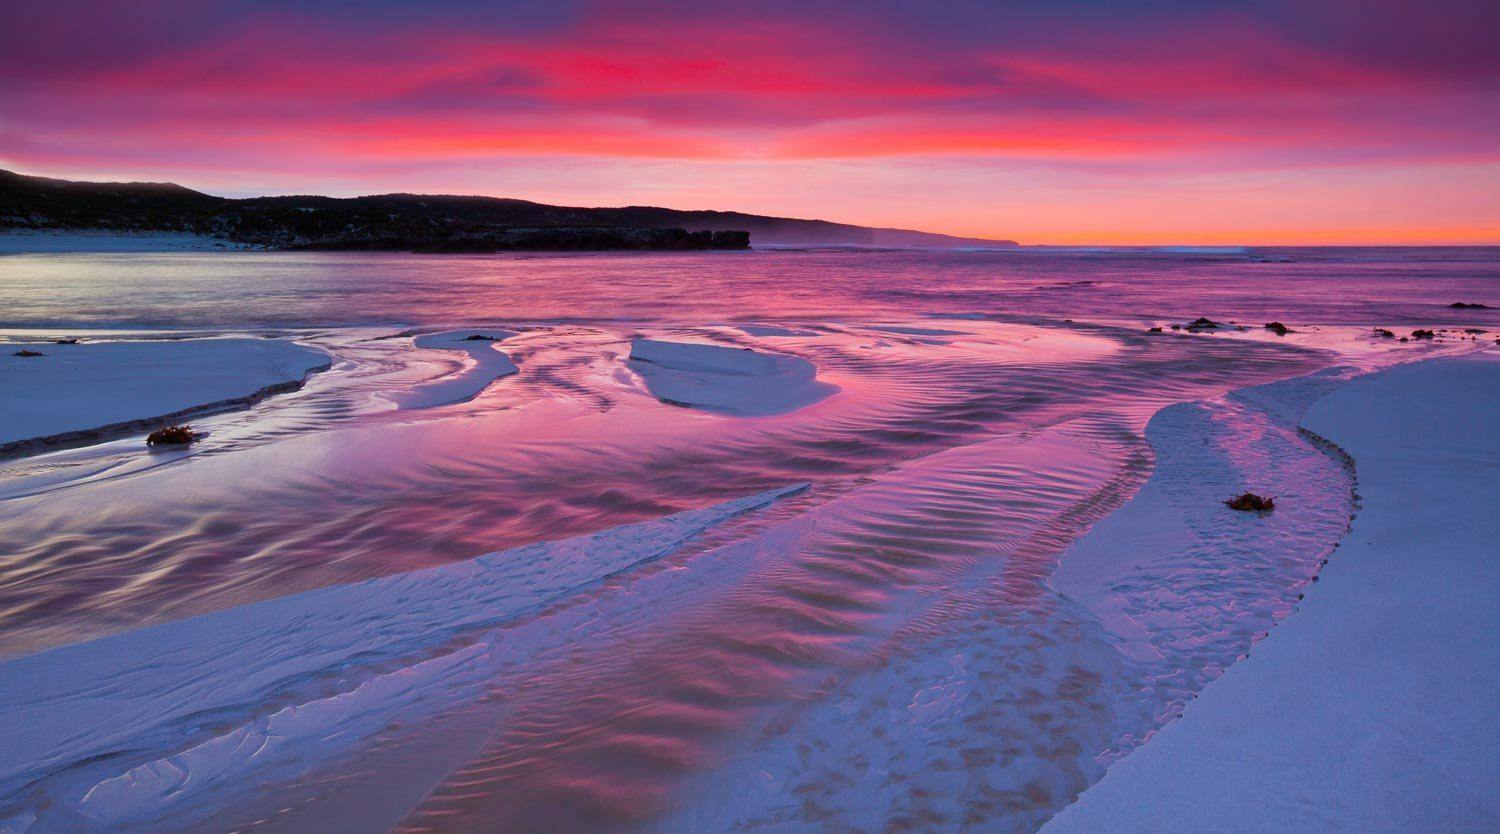 A desert with pink and purple shades of sand, Hanson Bay - Kangaroo Island SA